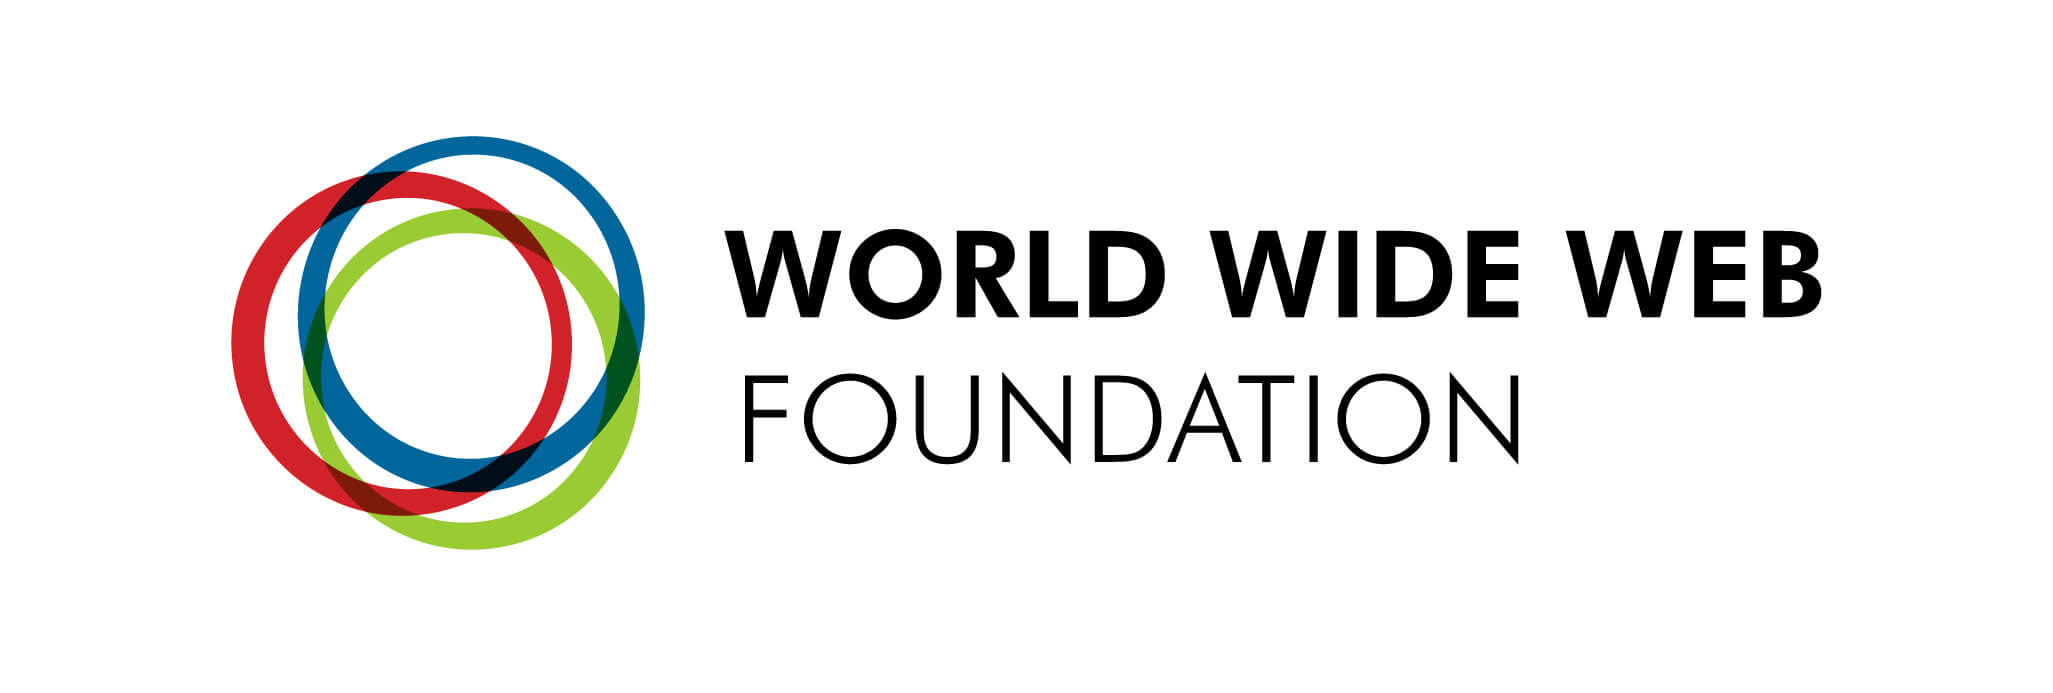 Esf web login. Worldwide. The Global Fund PNG.